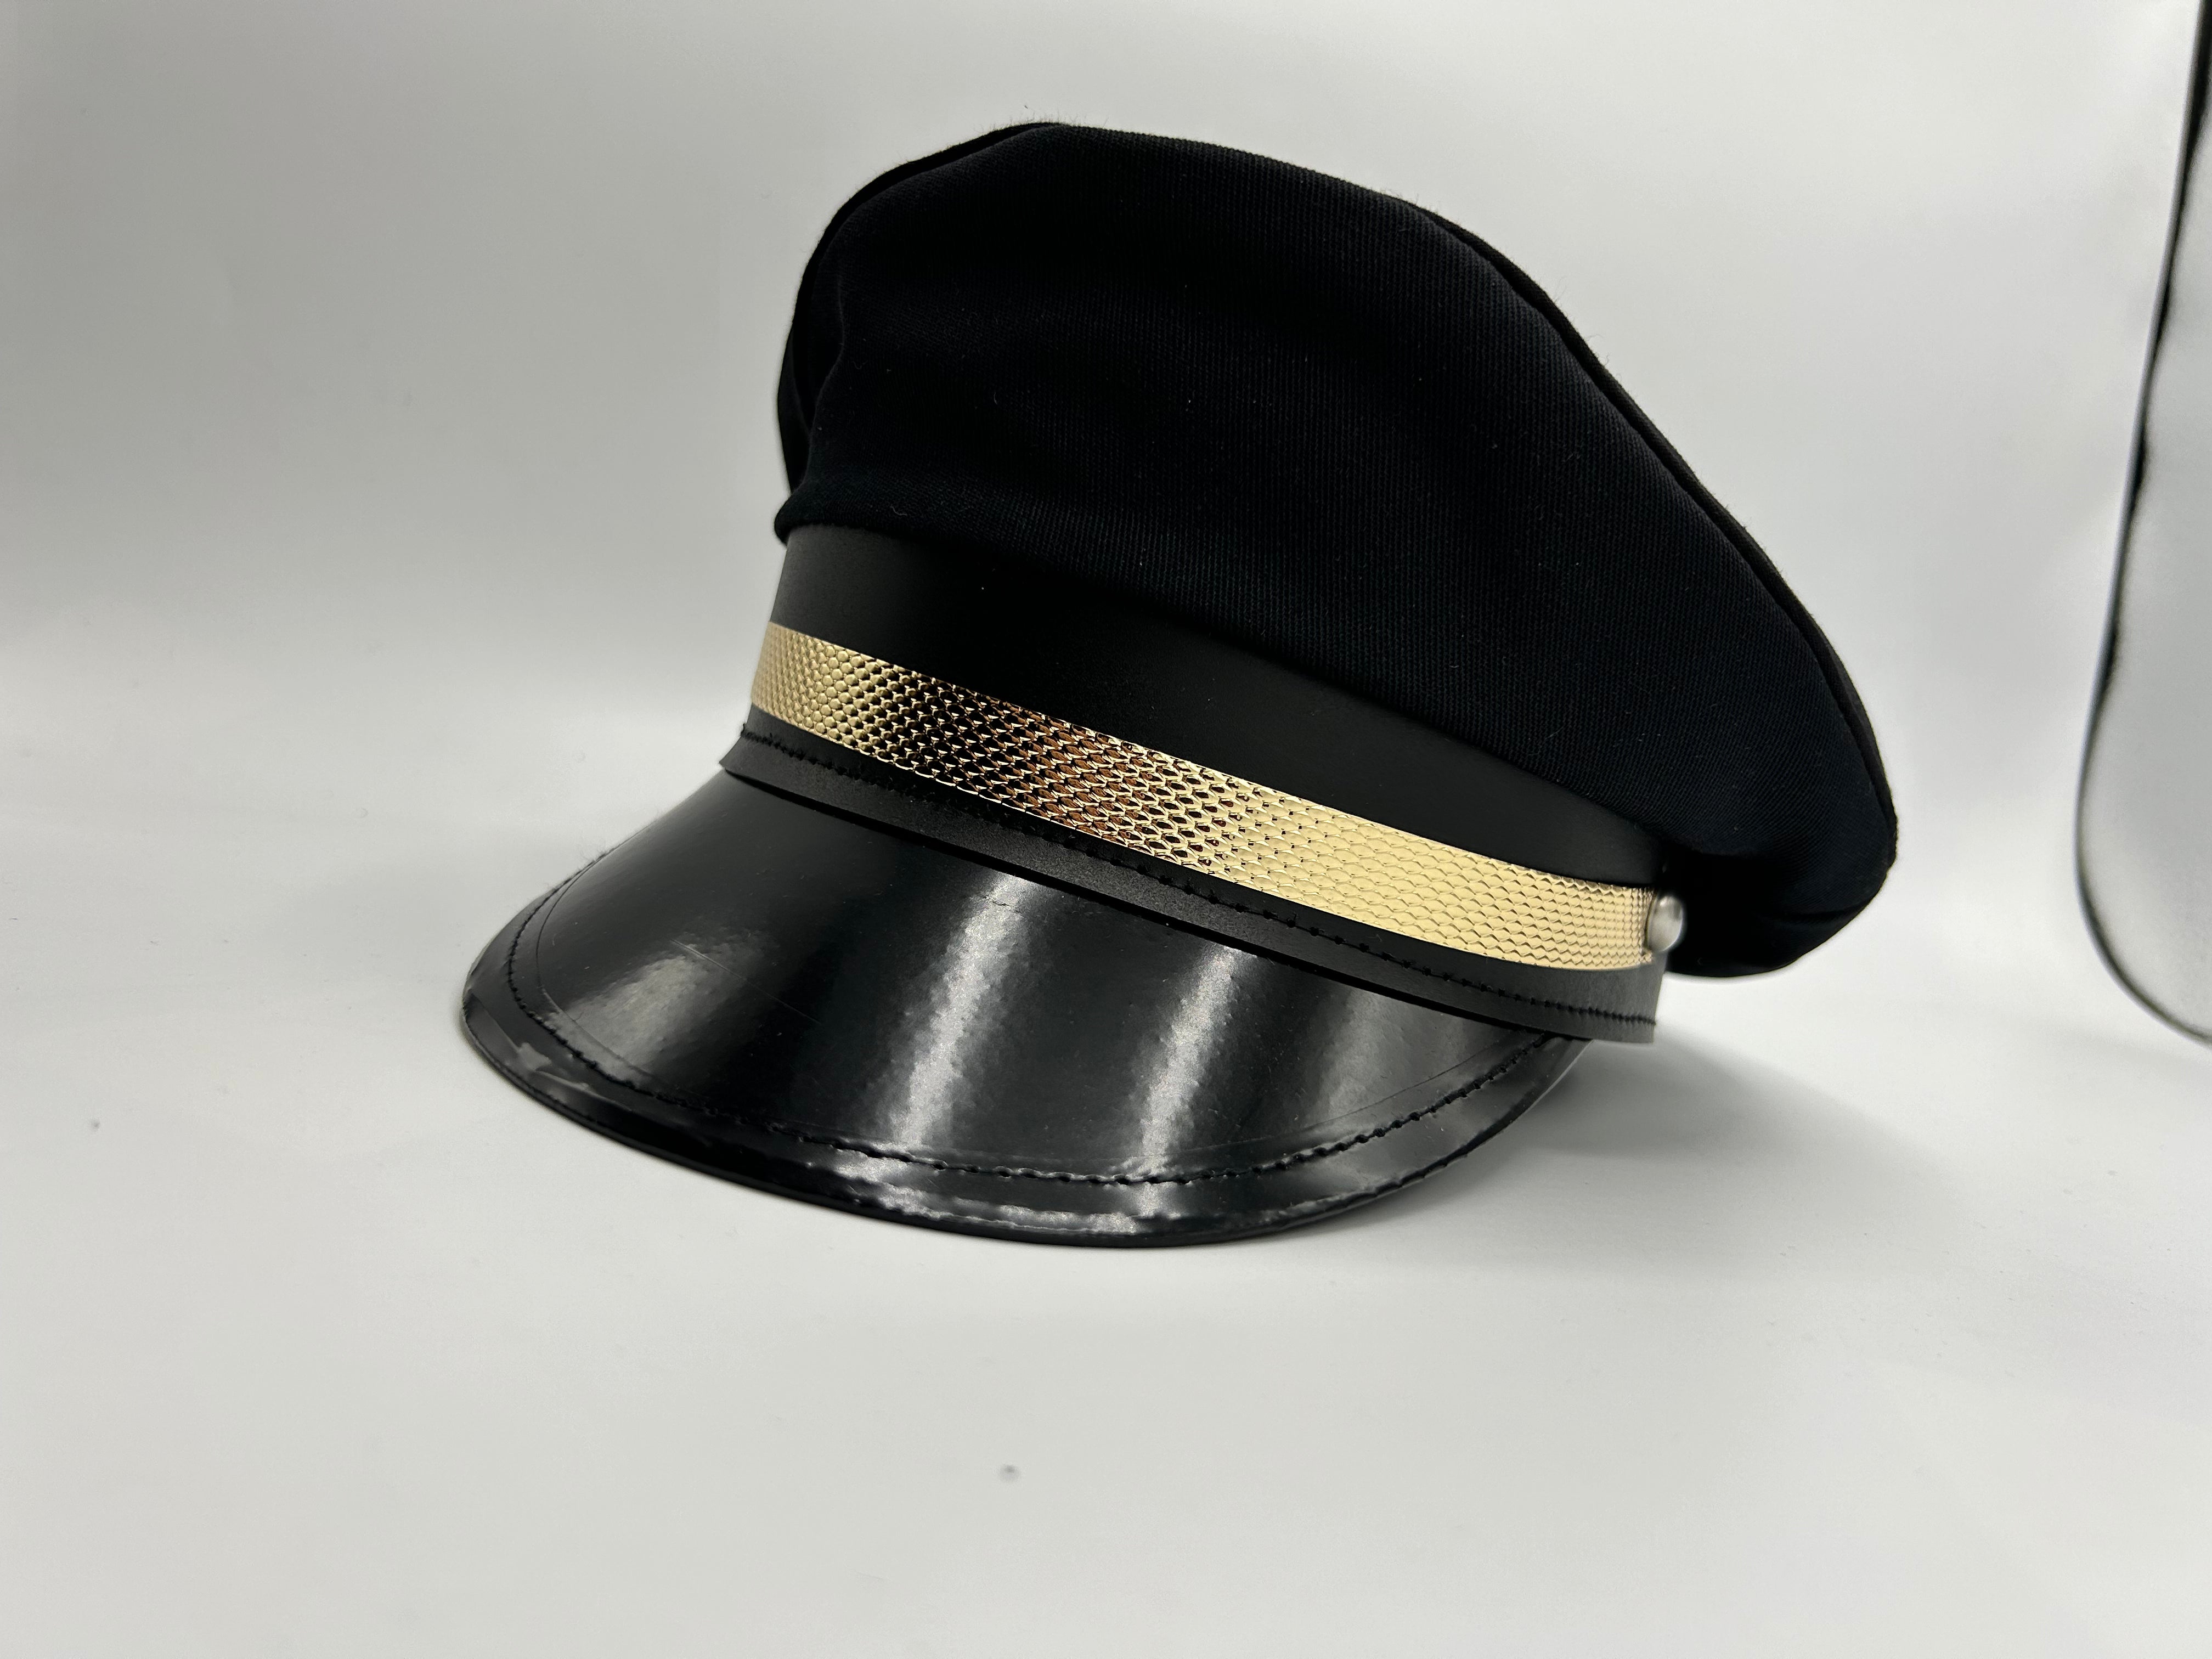 Conductor/Military Cap